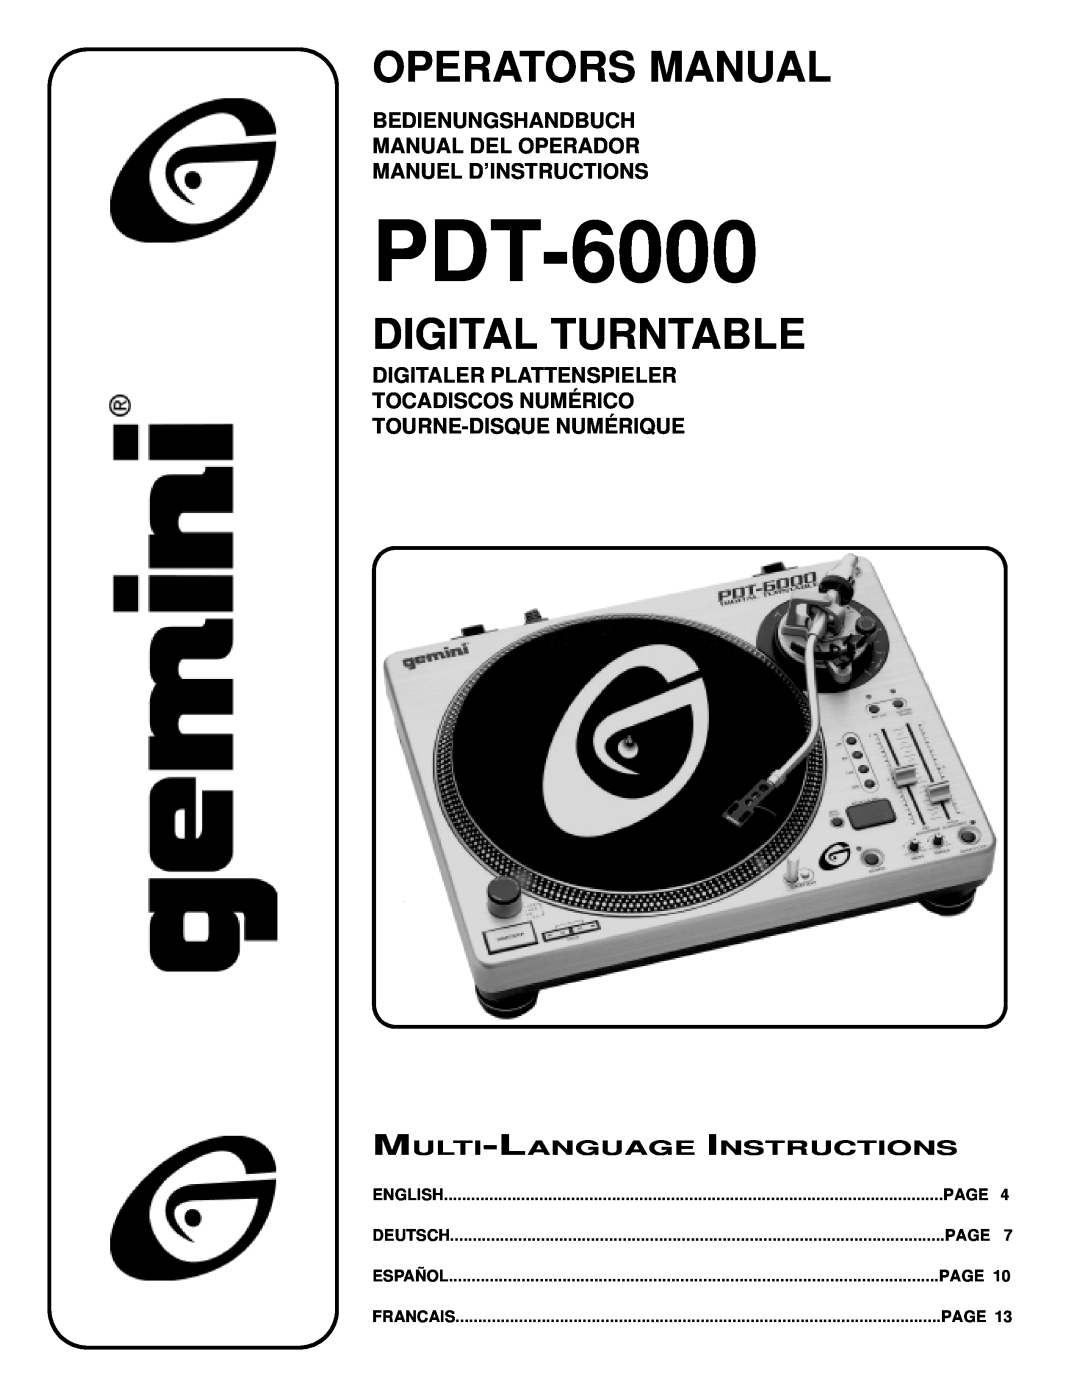 Gemini PDT-6000 manual Bedienungshandbuch Manual Del Operador, Manuel D’Instructions, Tourne-Disquenumérique, English 